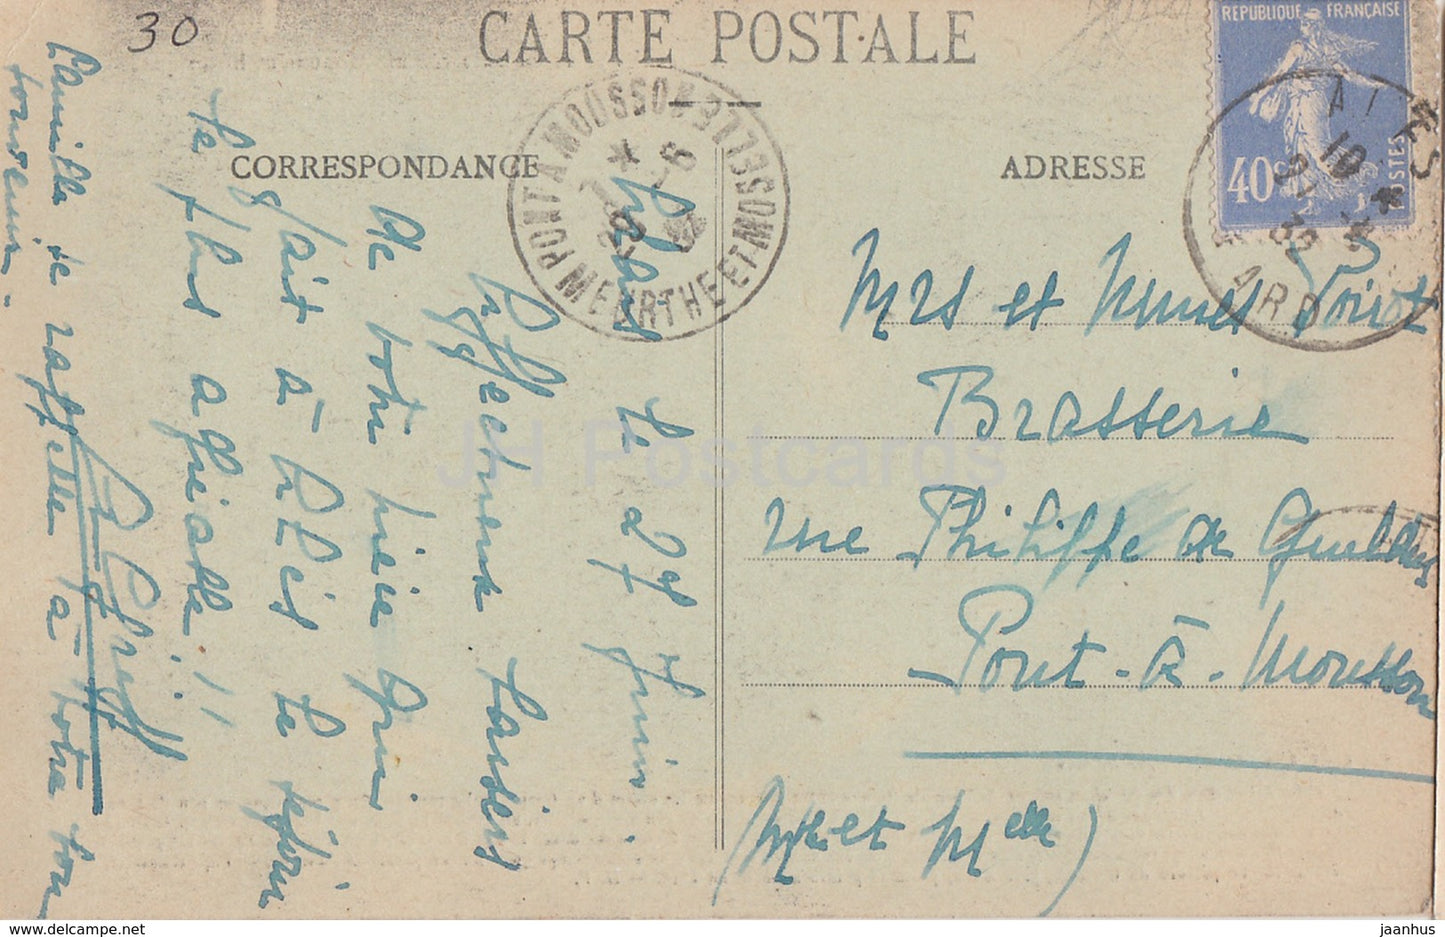 Alais - Cathedrale St Jean - Kathedrale - alte Postkarte - 1932 - Frankreich - gebraucht